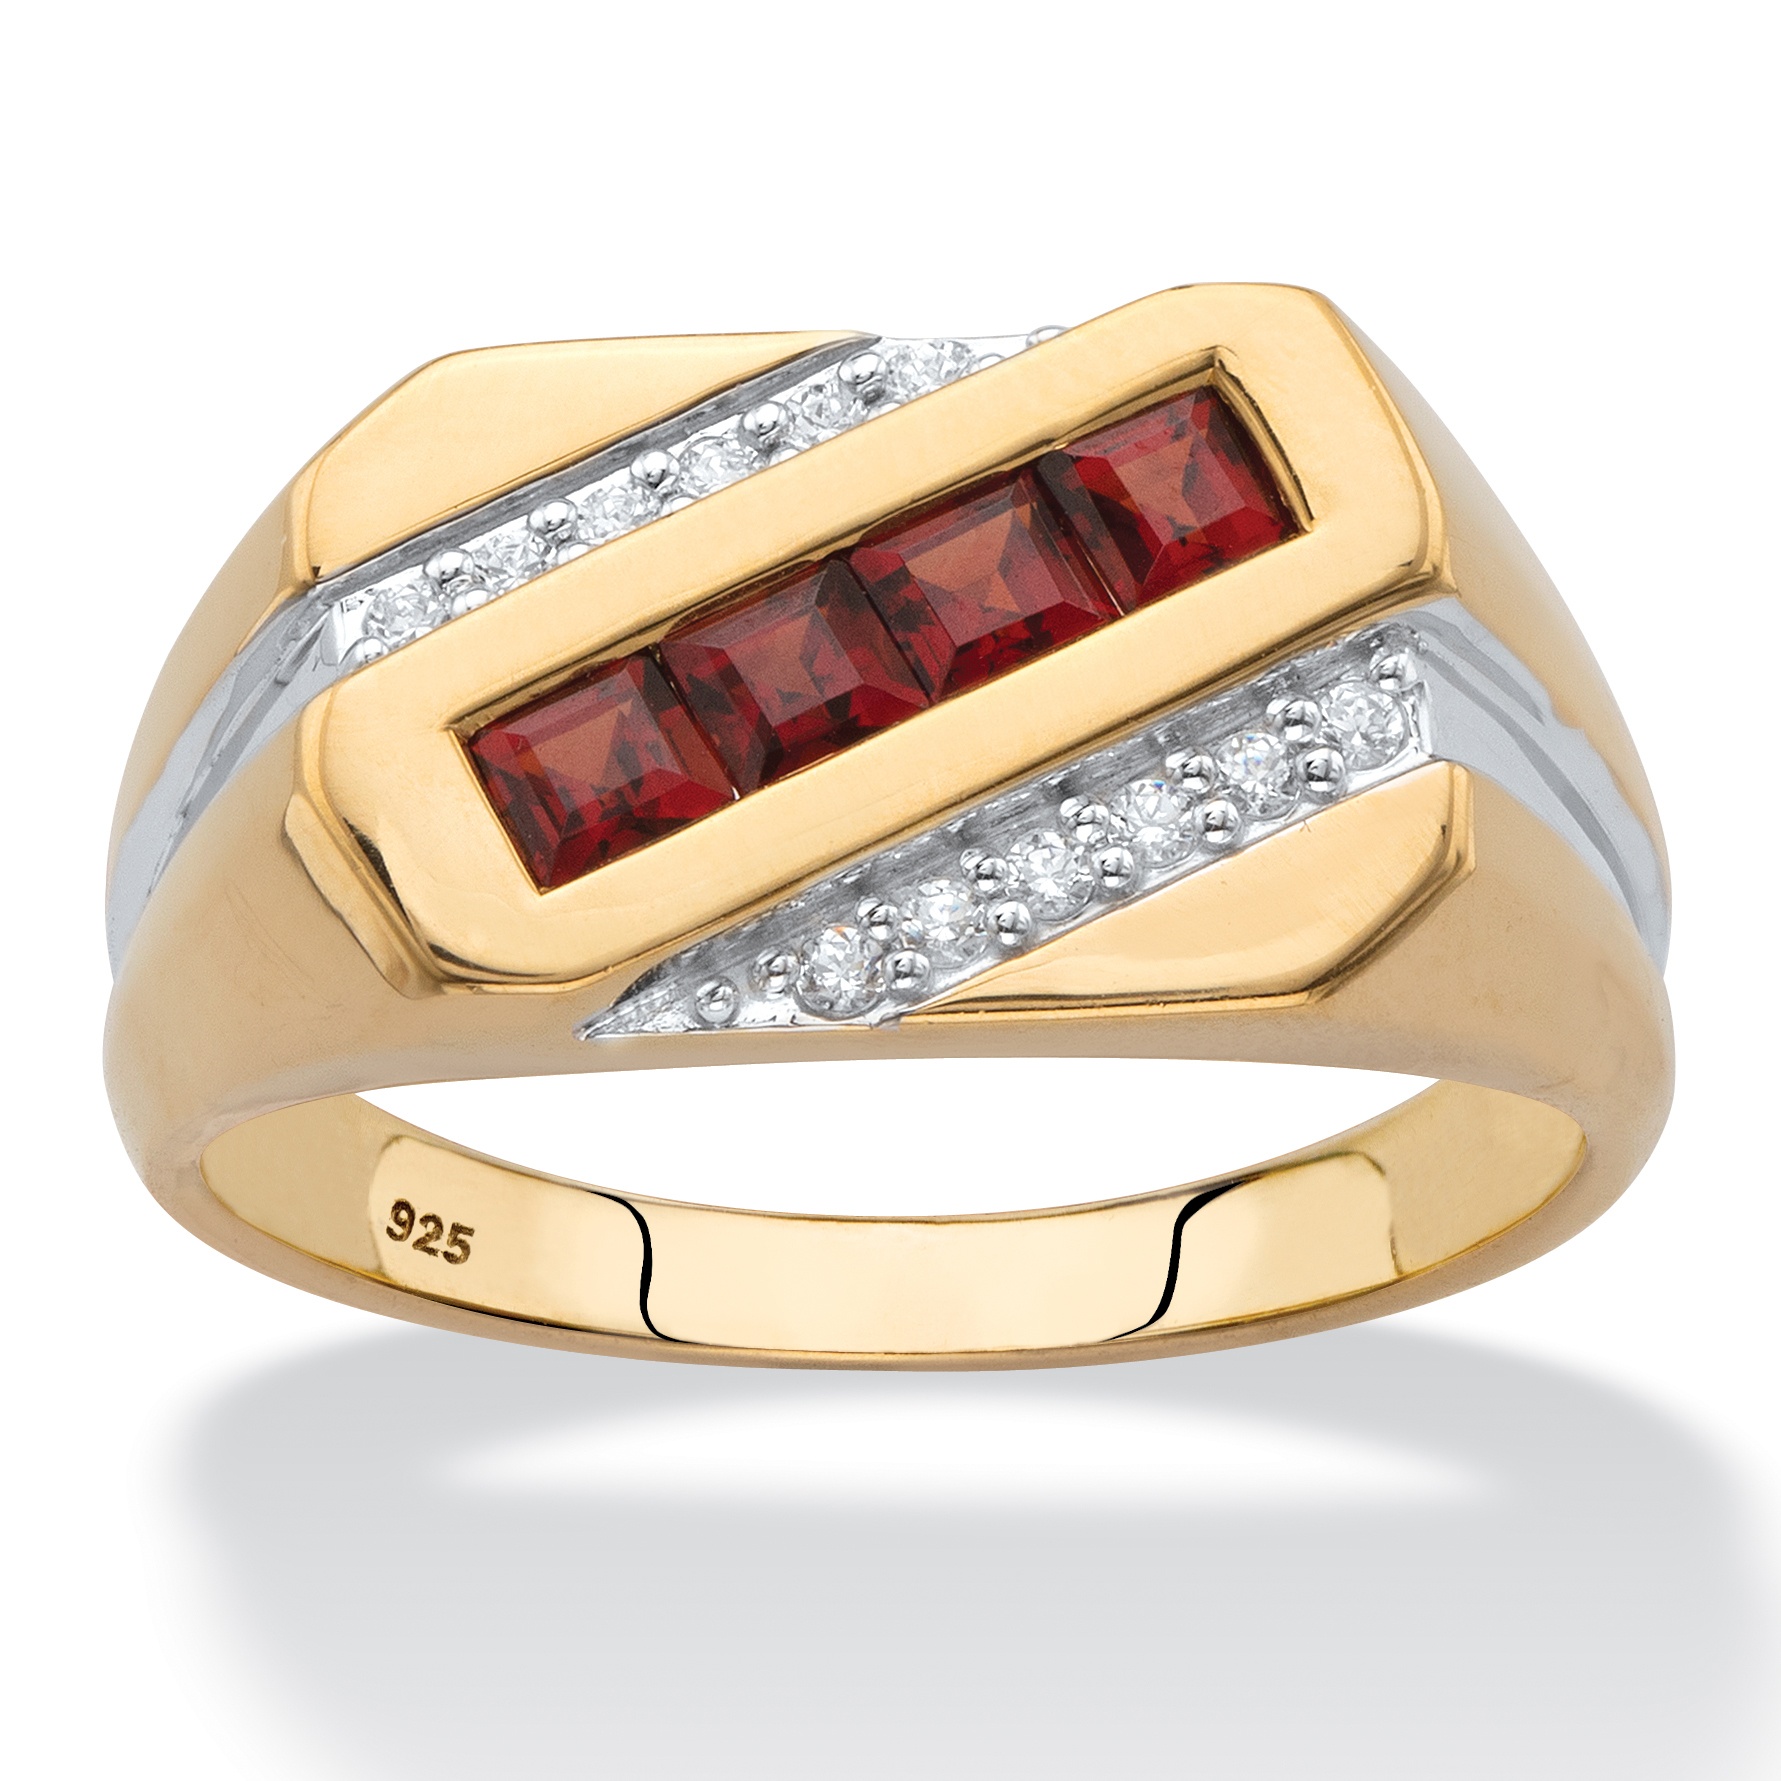 SVC-JEWELS 14k Black Gold Over 925 Sterling Silver Red Garnet Cluster Engagement Wedding Band Ring Mens 